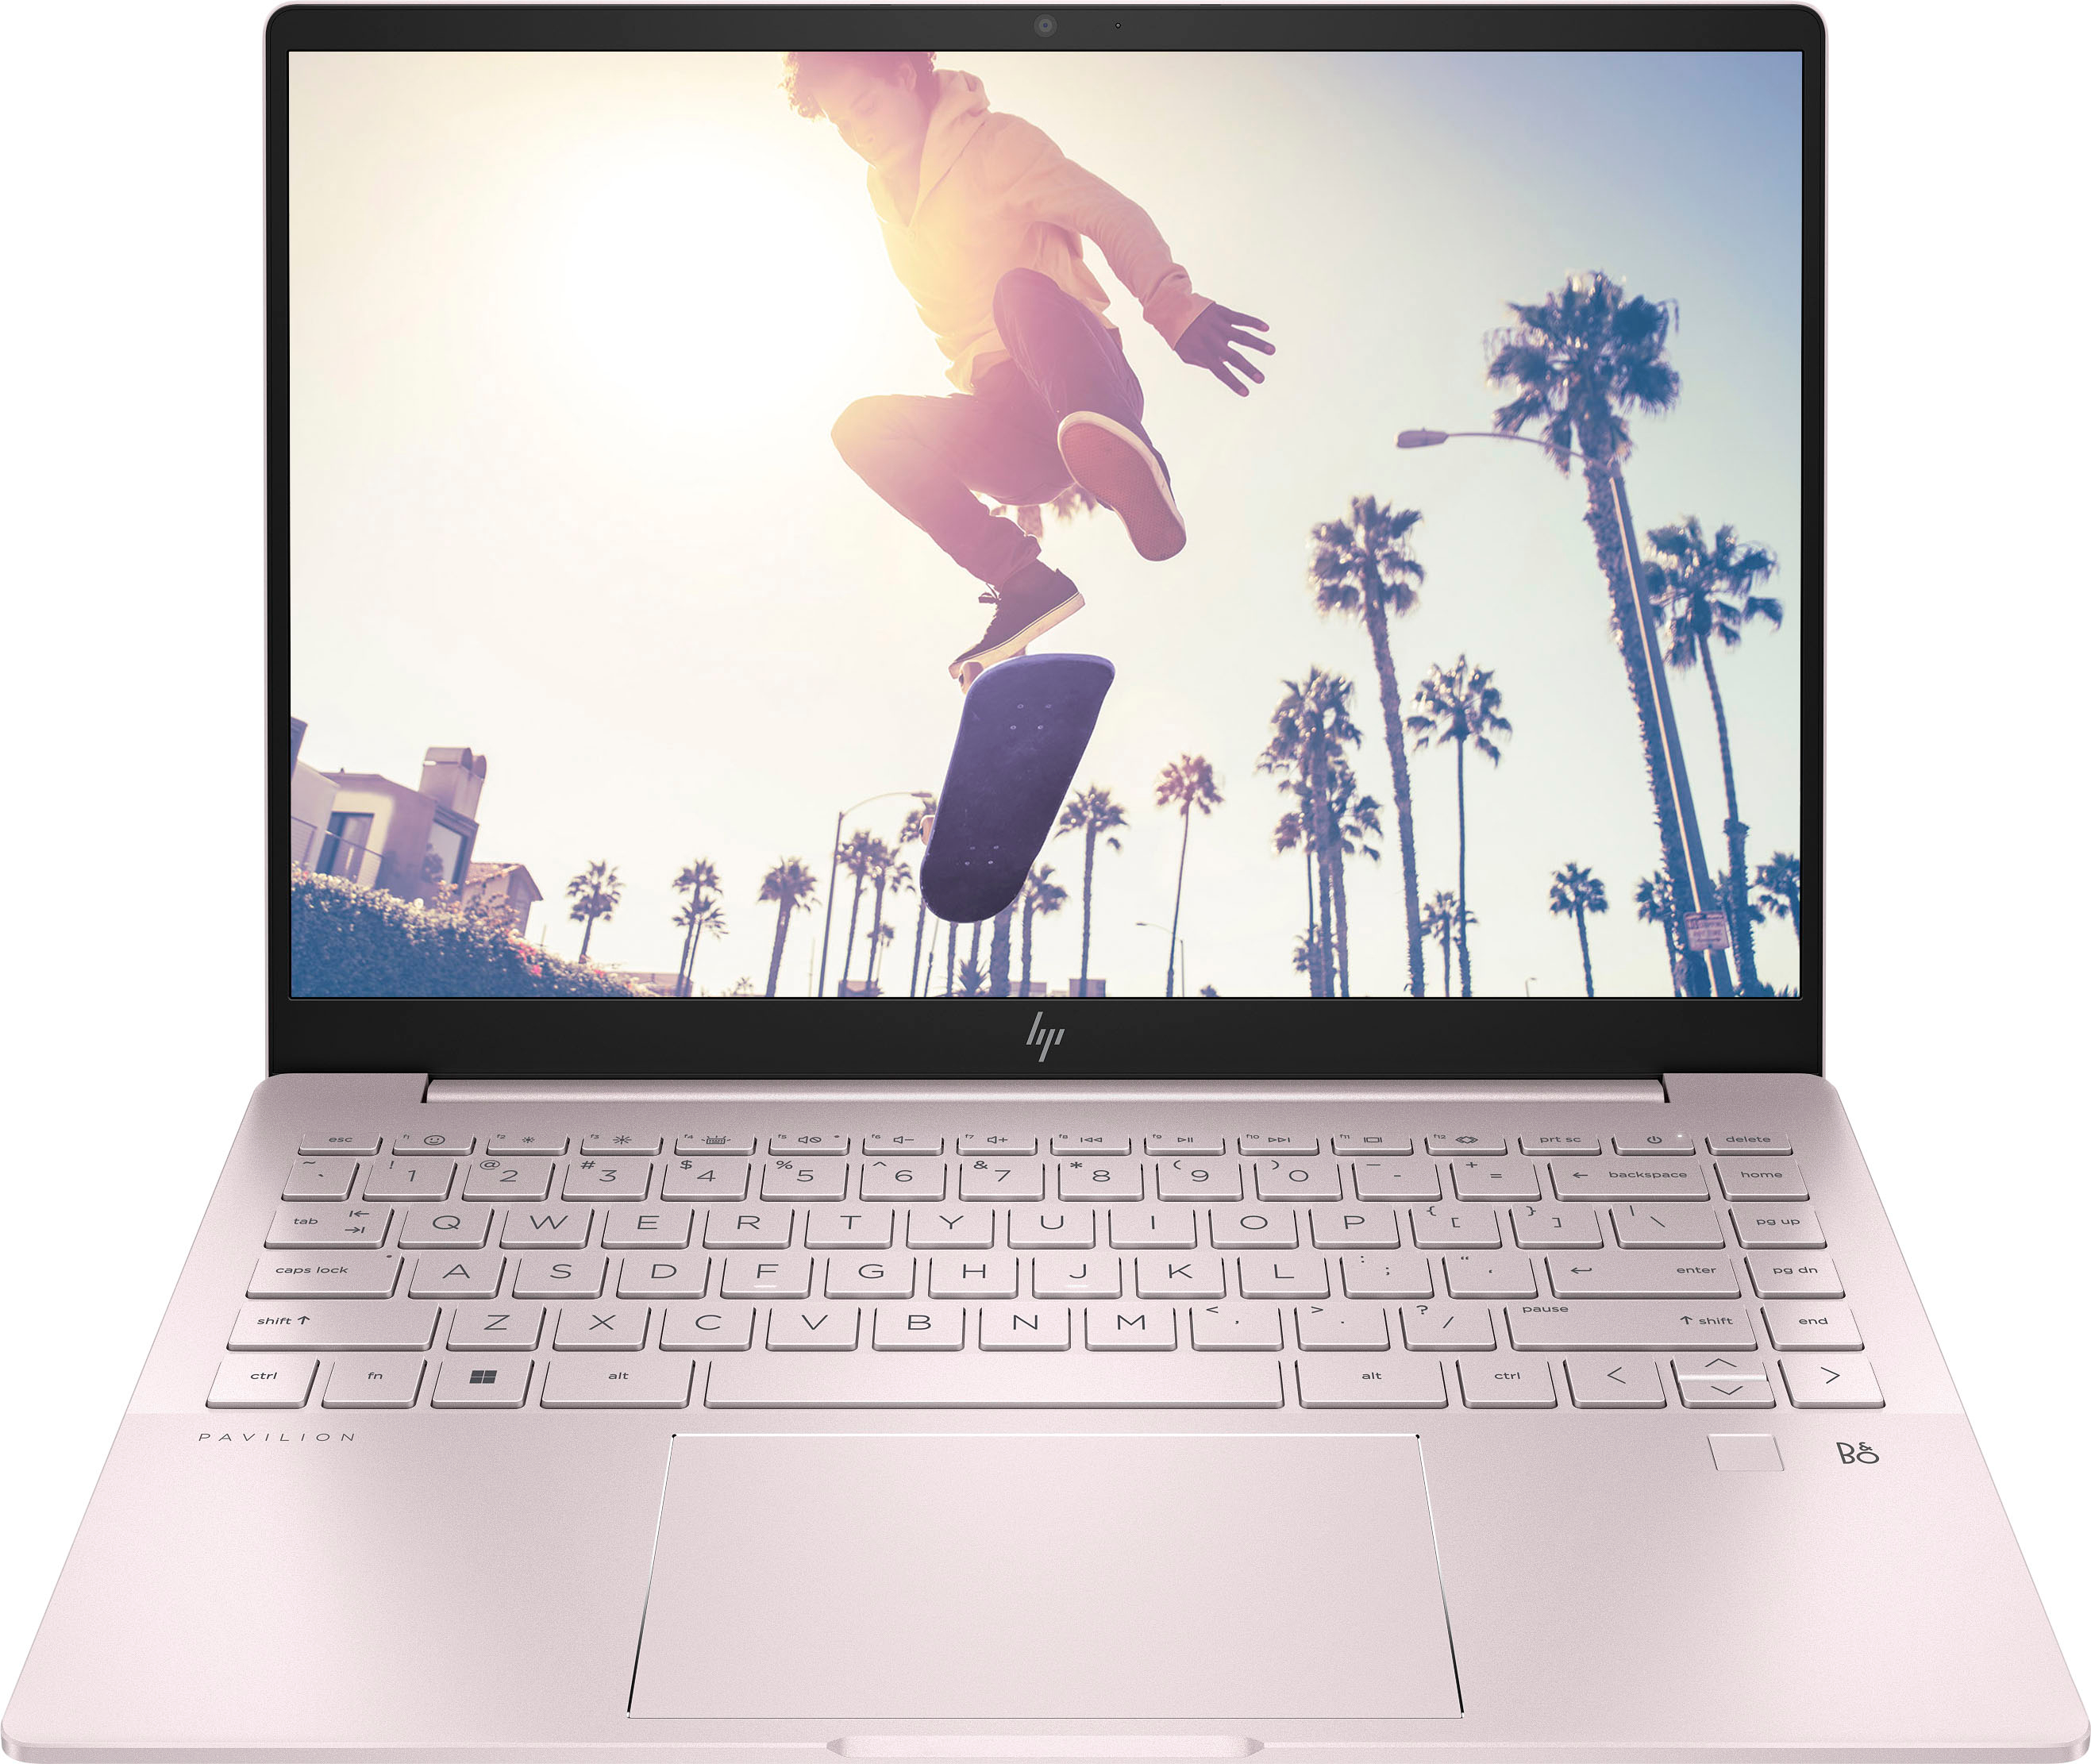 HP Pavilion Plus Laptop (14-inch) Review: Budget OLED Beauty - CNET